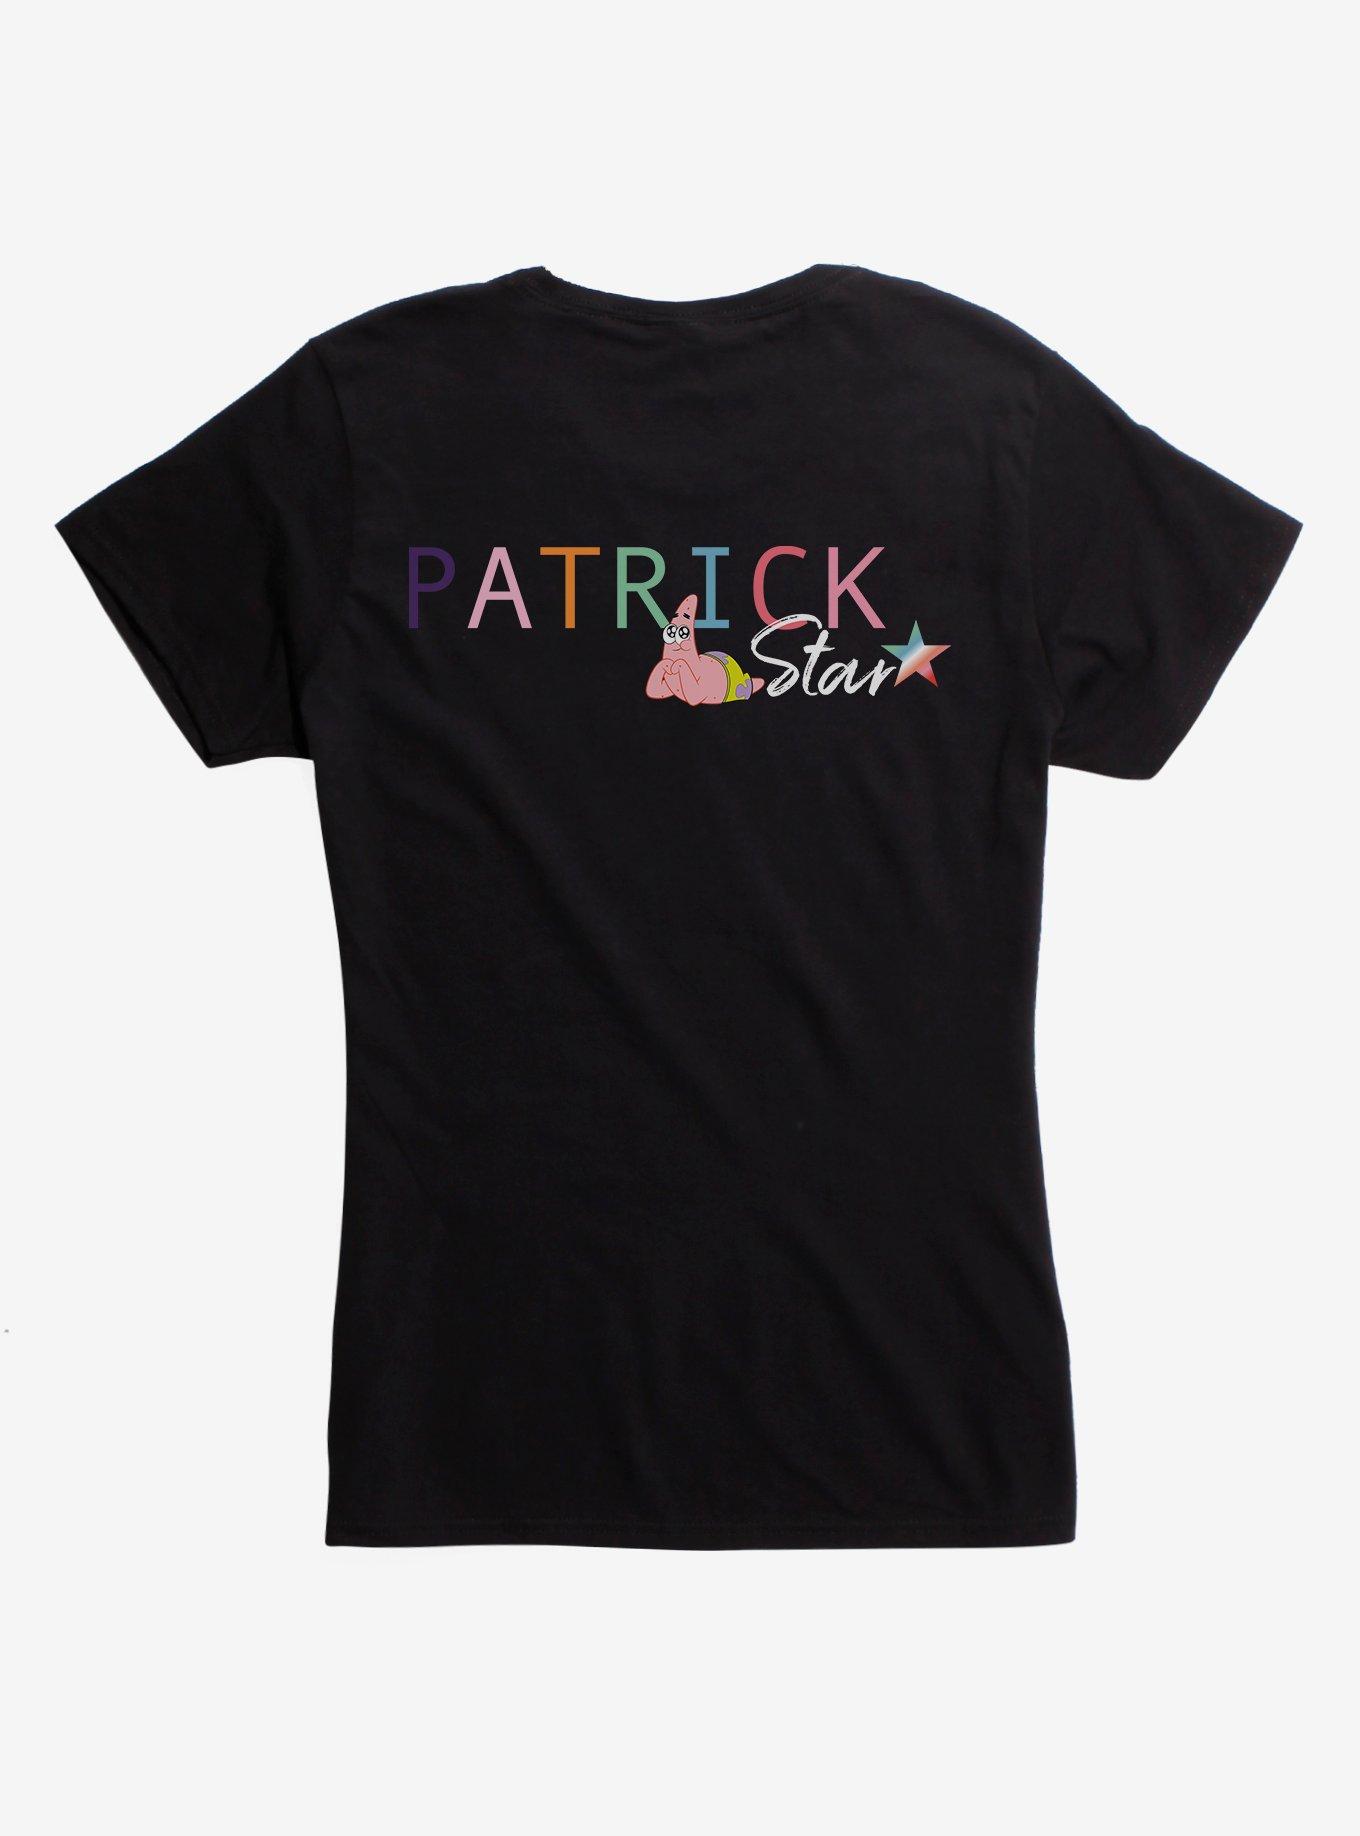 Spongebob Squarepants Patrick Star Girls T-Shirt